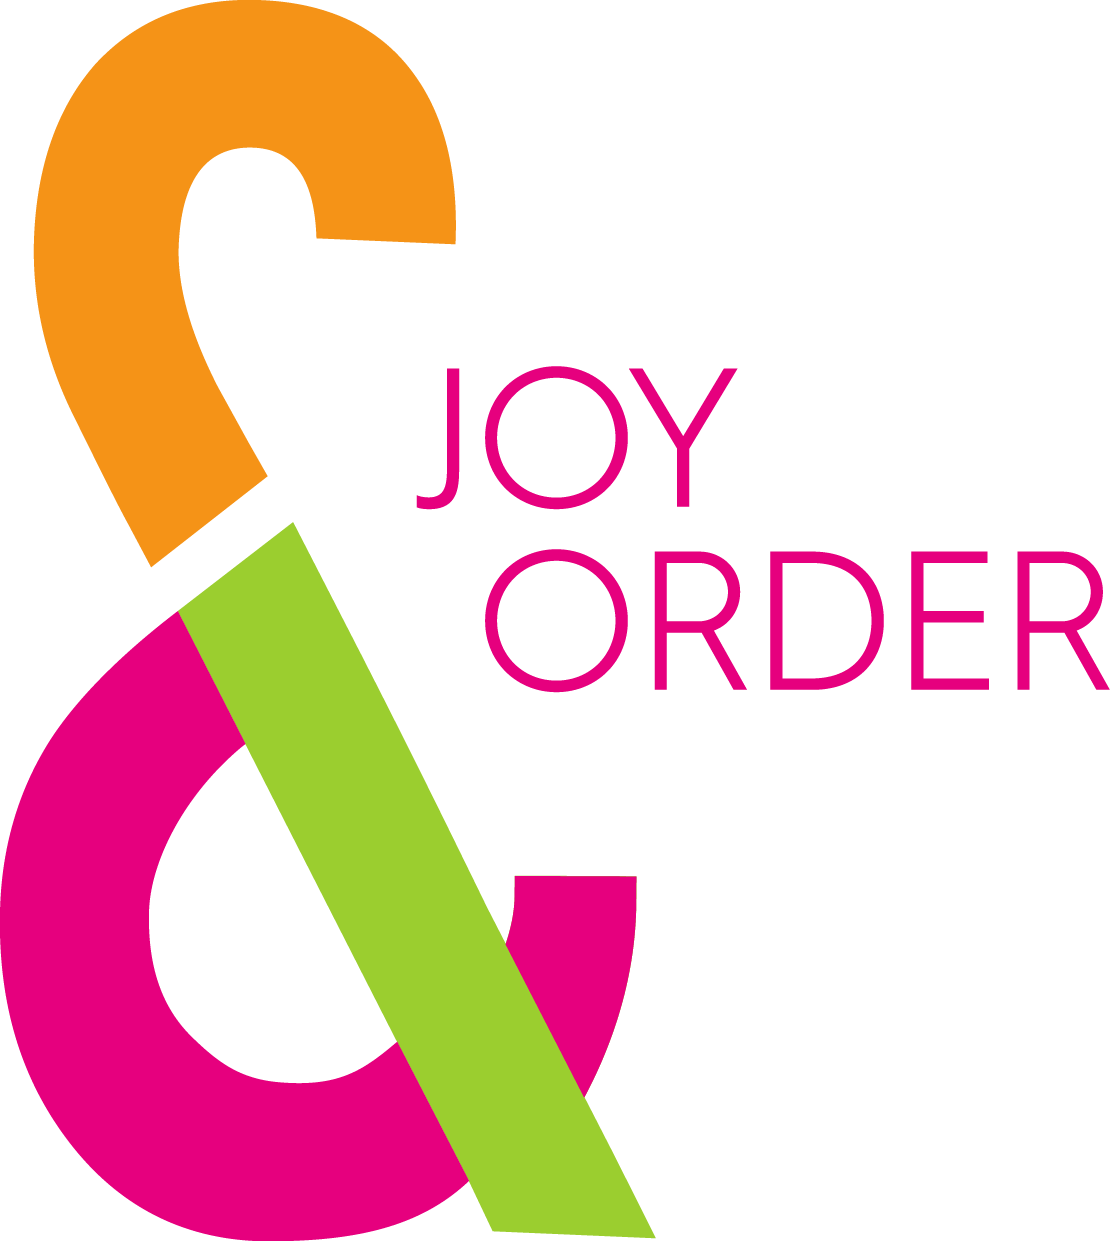 Joy & Order logo.